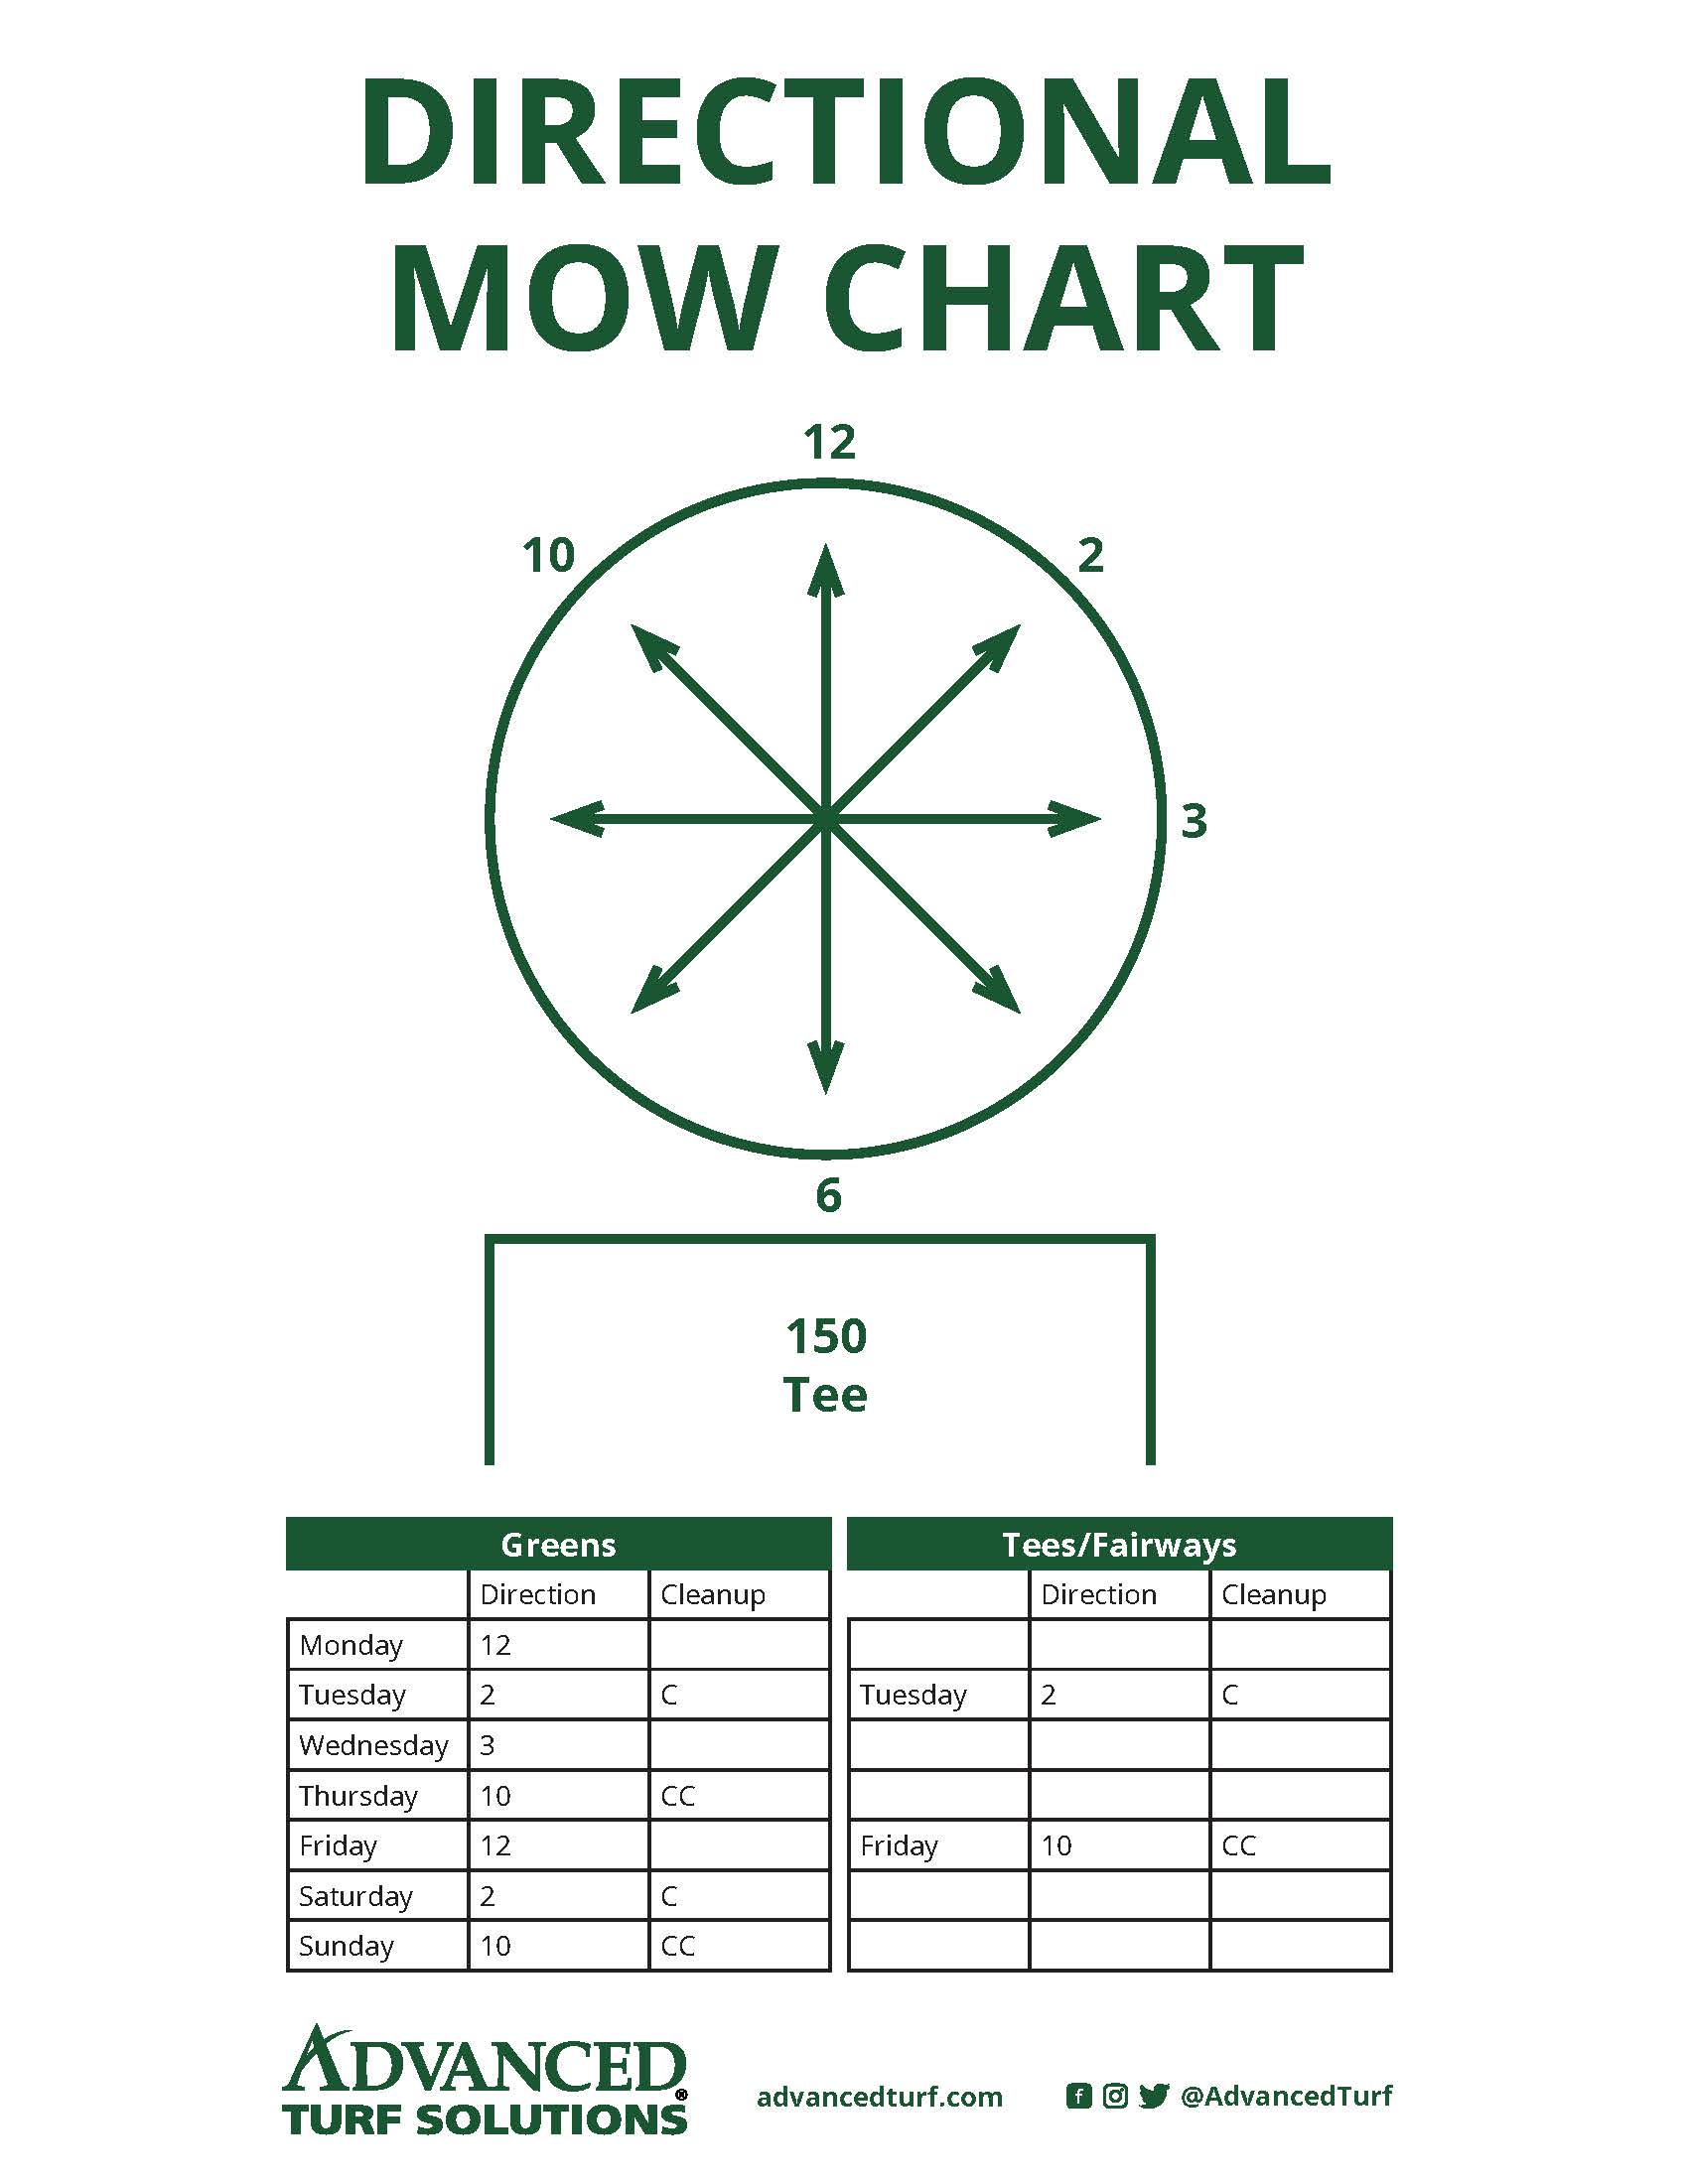 ATS Directional Mow Chart